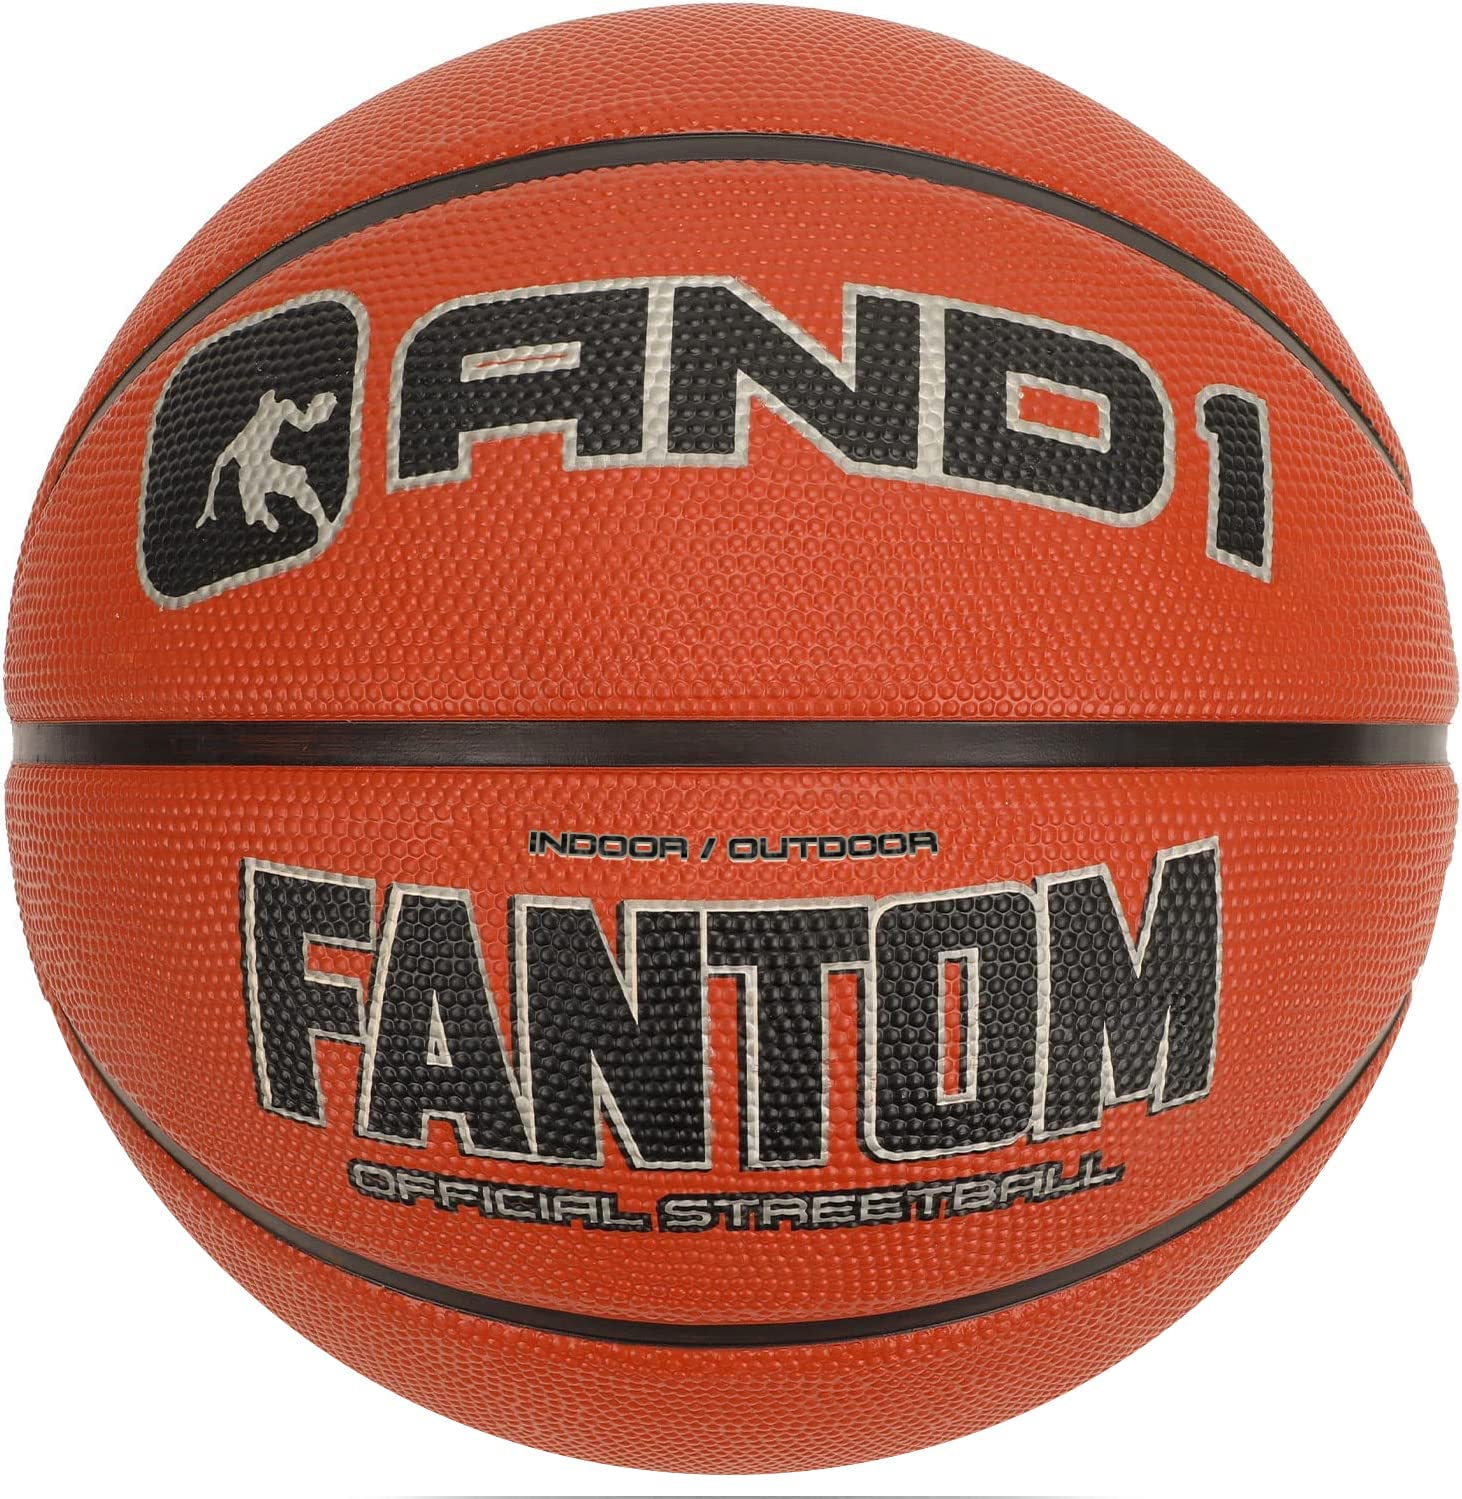 AND1 Fantom Rubber Street Basketball (Orange) $4.88